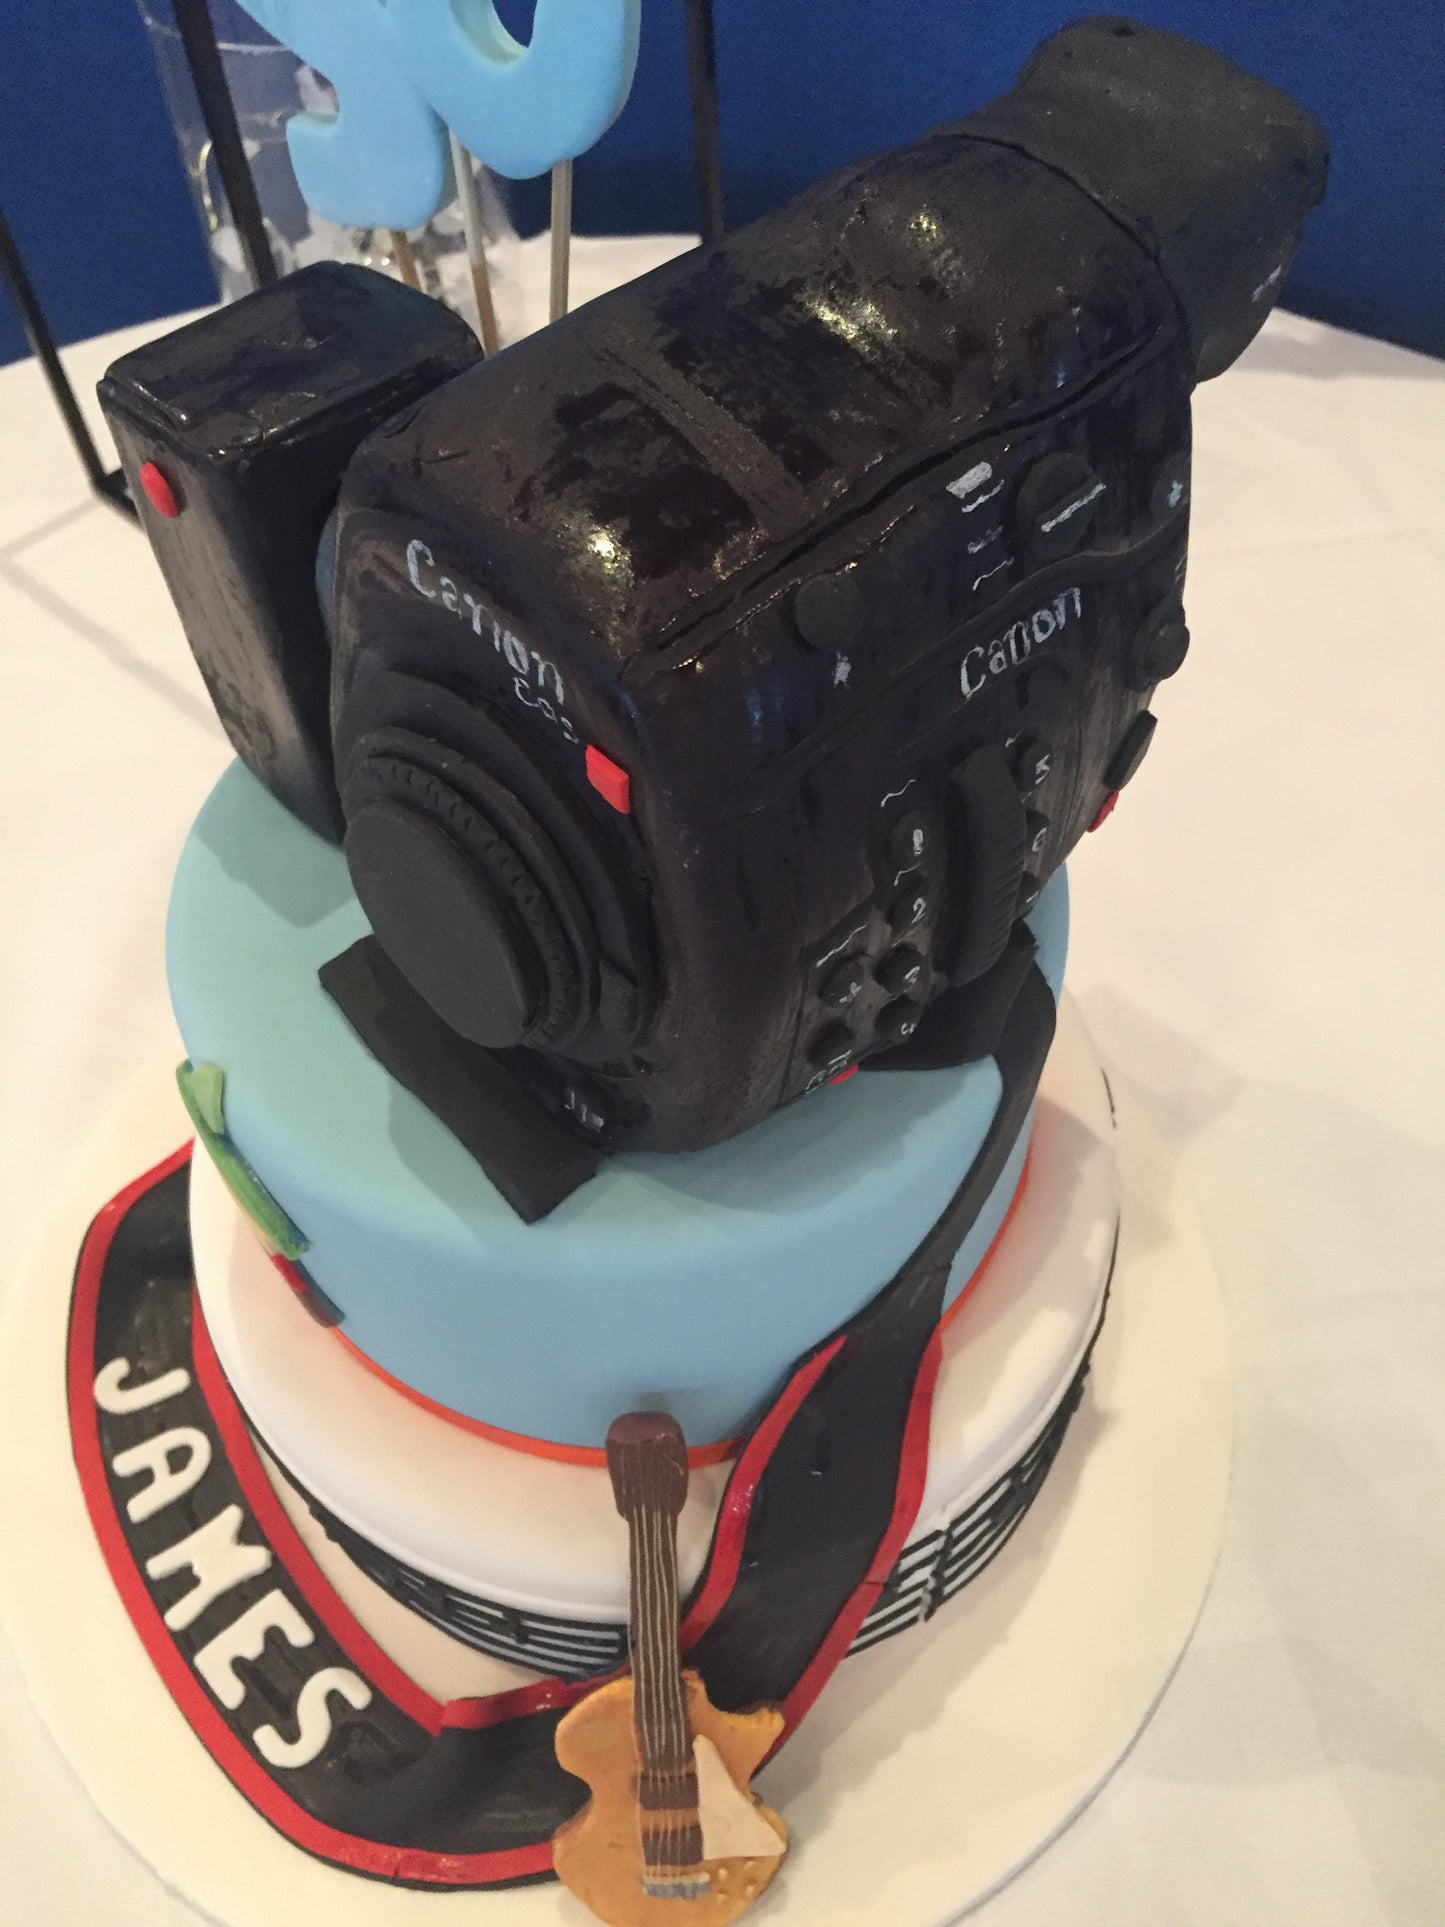 3D Camera Cake